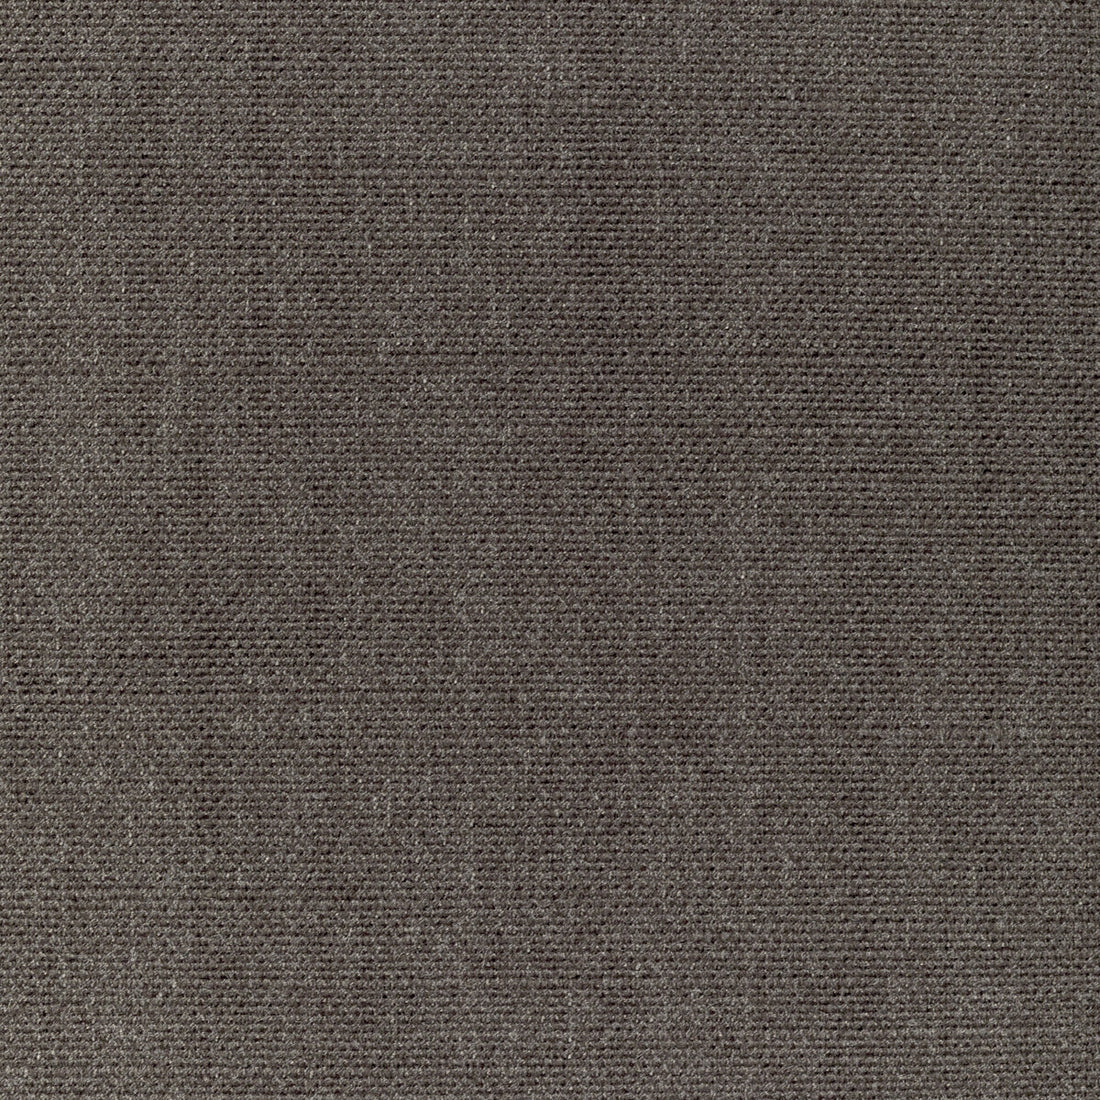 Kravet Smart fabric in 36112-621 color - pattern 36112.621.0 - by Kravet Smart in the Performance Kravetarmor collection